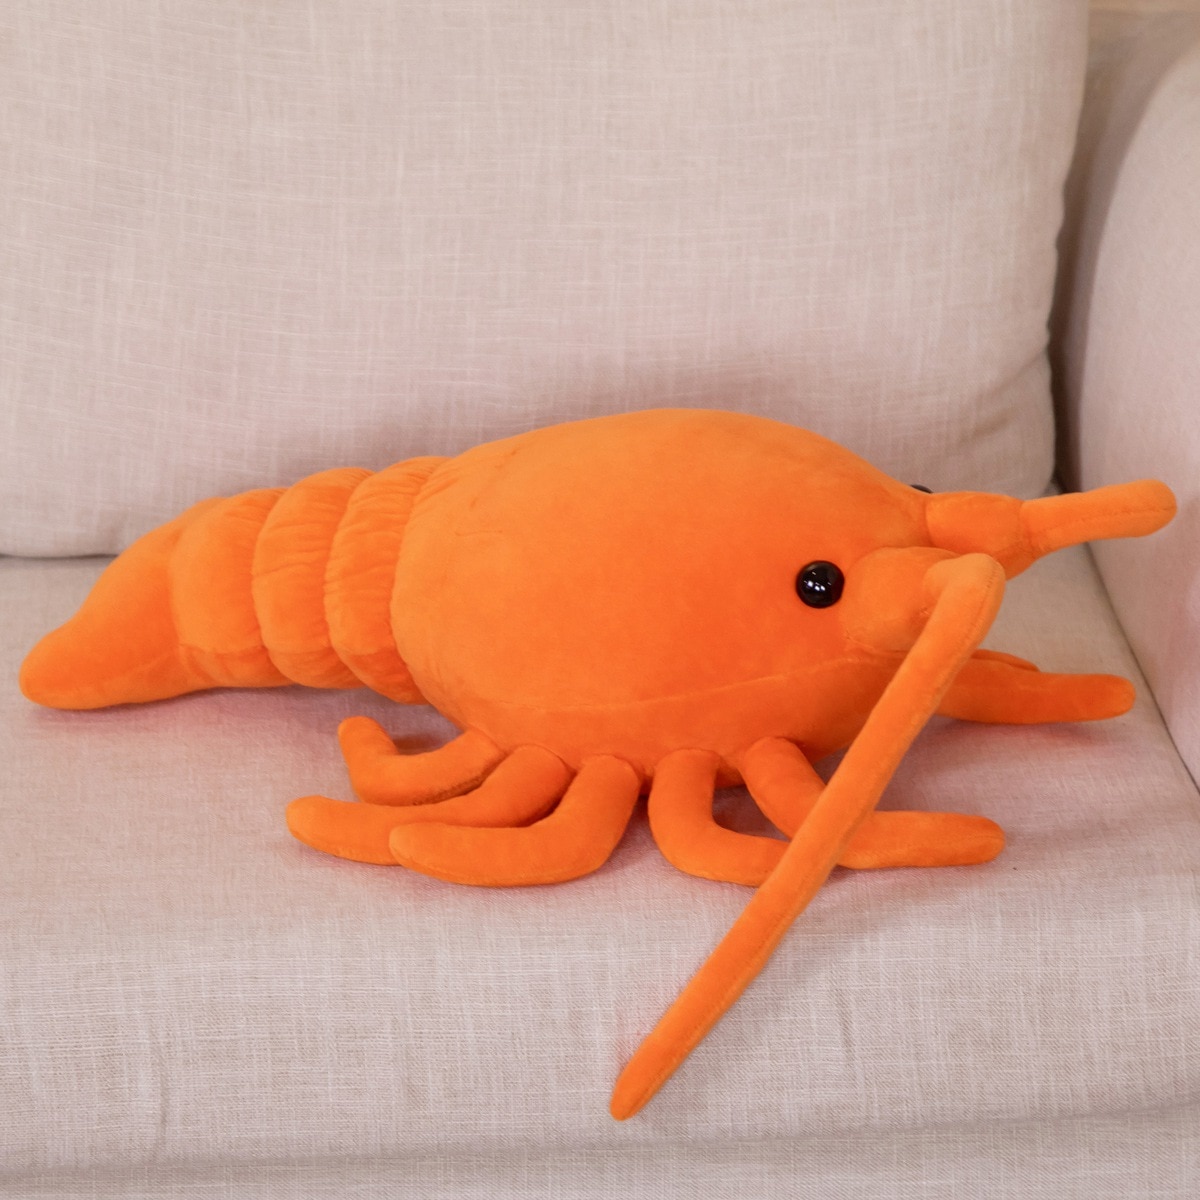 50 65cm Creative Simulation Lobster Plush Toy Lifelike Crayfish Doll Soft Stuffed Animal Shrimp Pillow Birthday 2